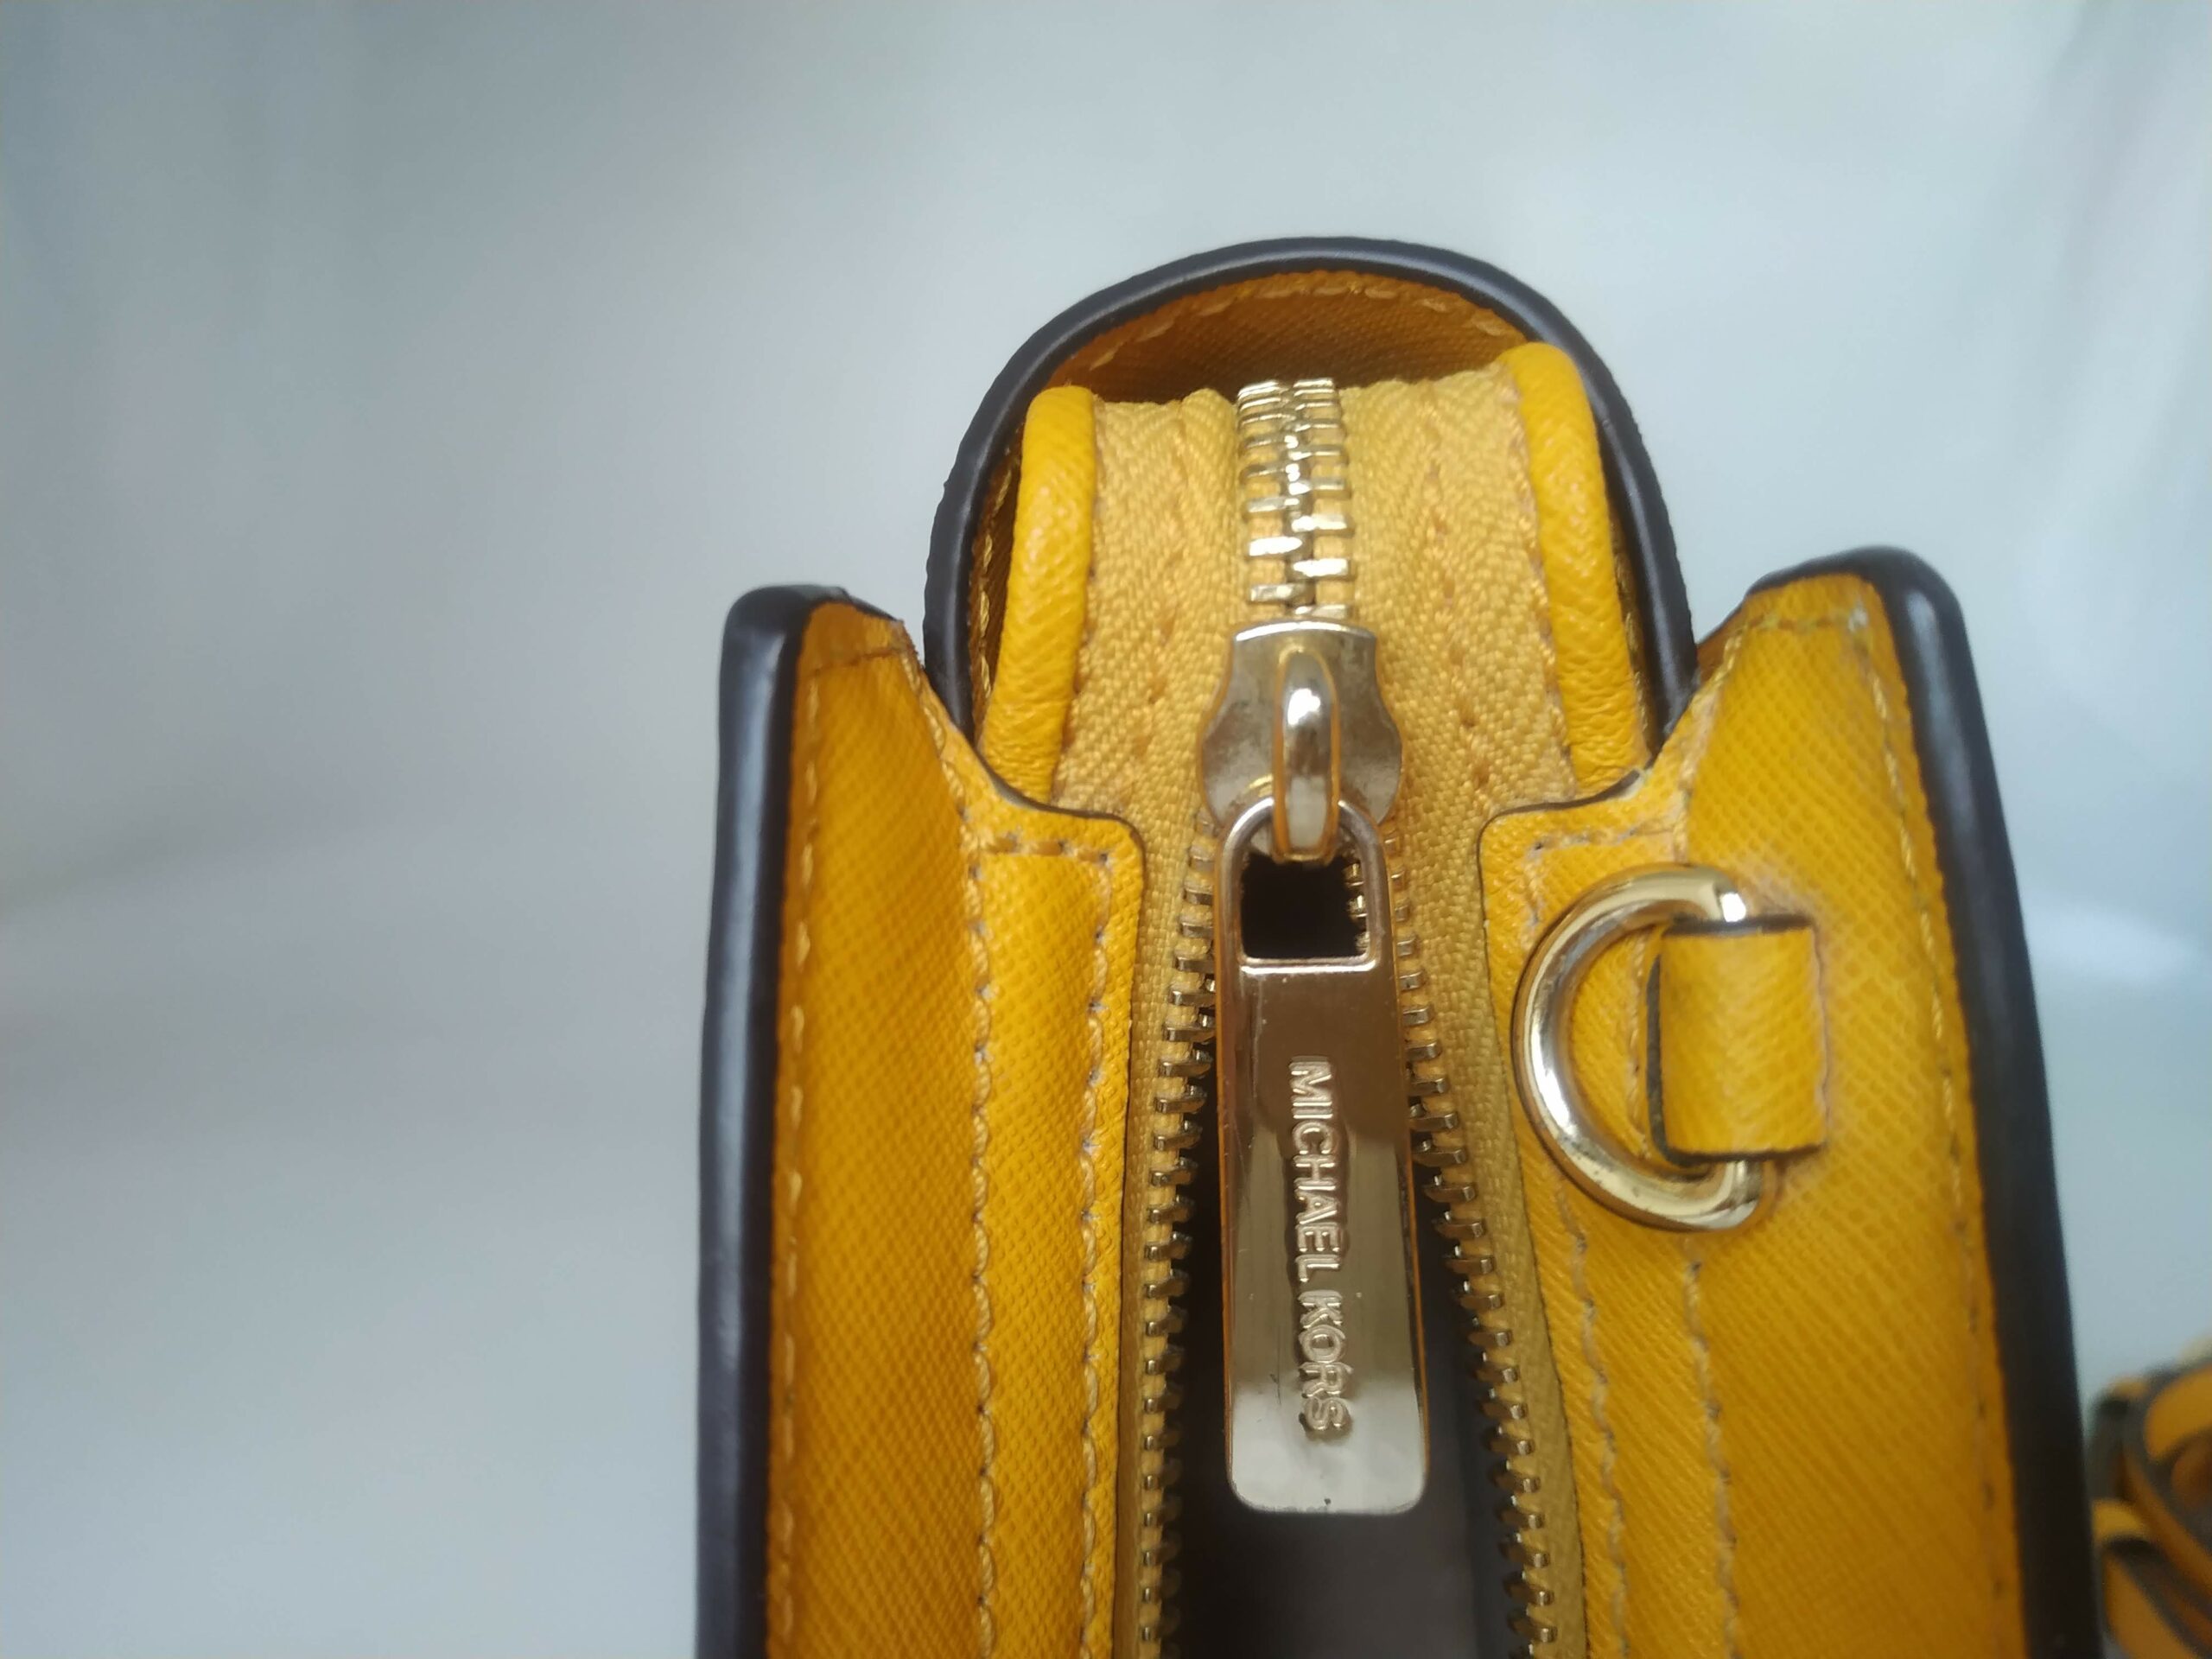 Michael Kors Metallic Gold Saffiano Leather Mini Selma Crossbody Bag  Michael Kors | The Luxury Closet